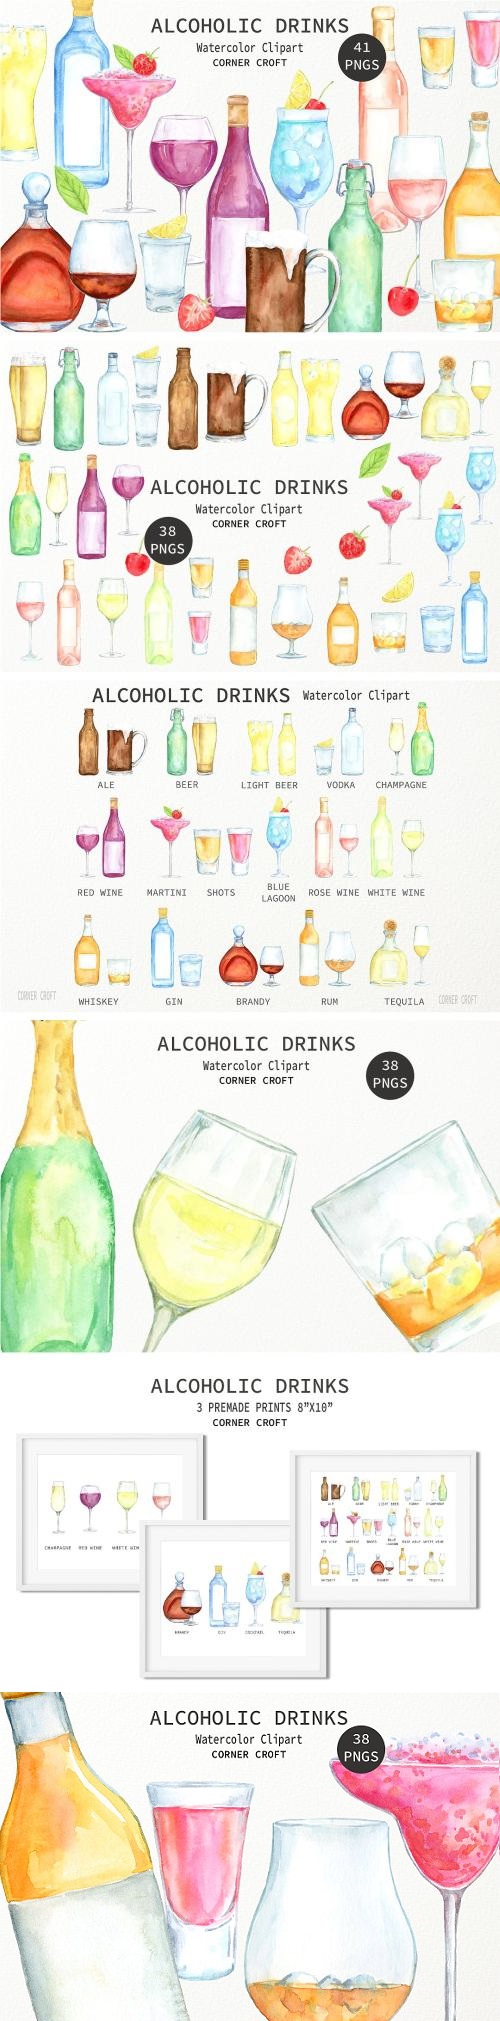 Watercolor Alcoholic Drinks Illustration - 2261398